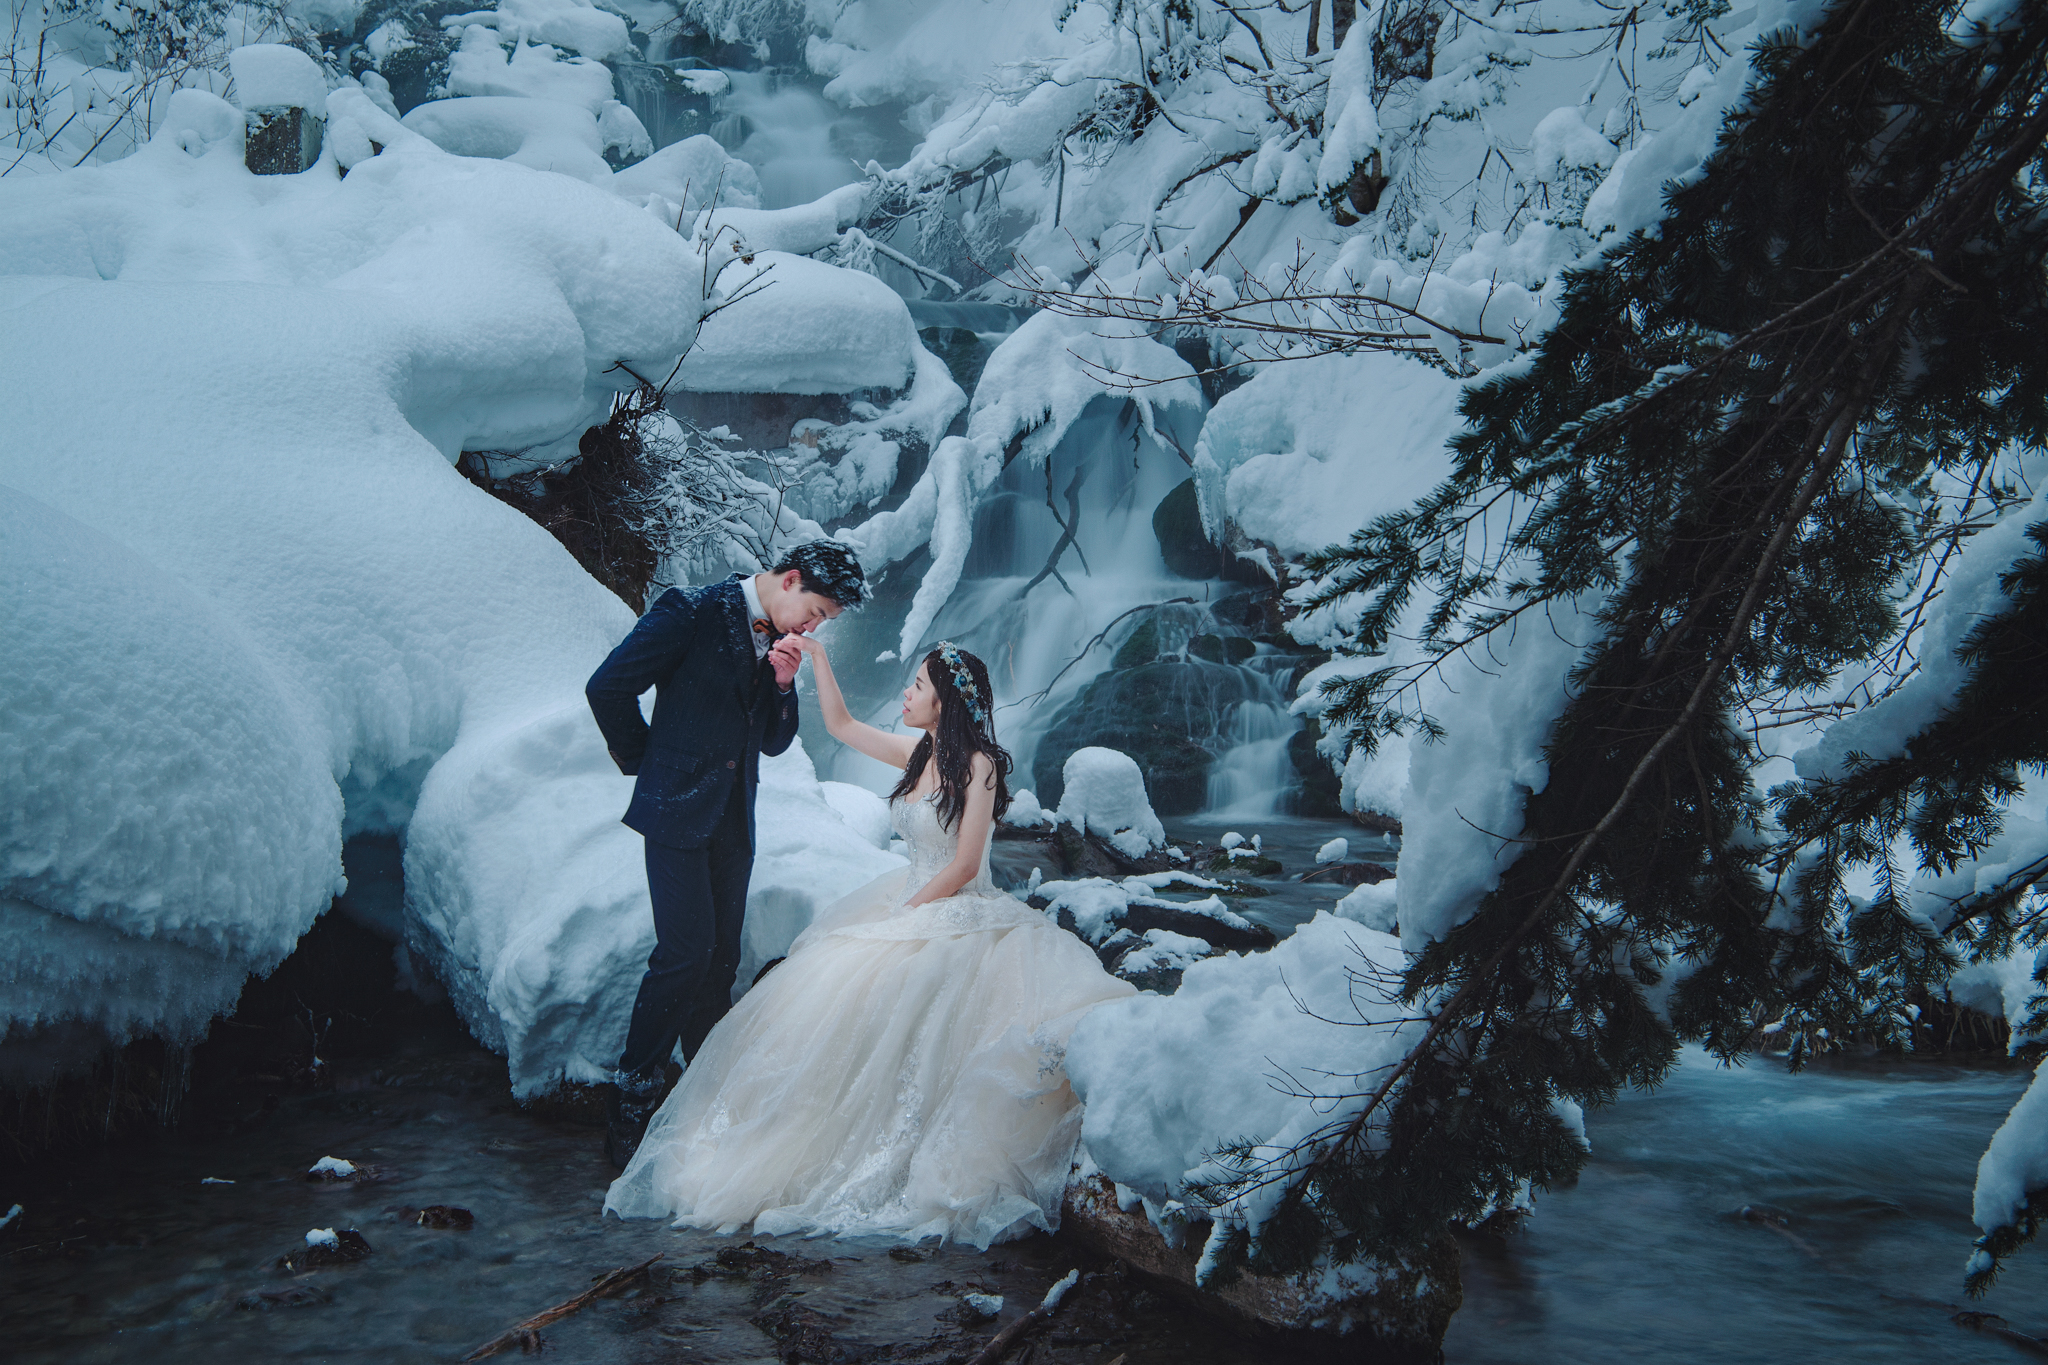 東法, Donfer, Donfer Photography, EASTERN WEDDING, 海外婚紗, 北海道婚紗, Hokkaido